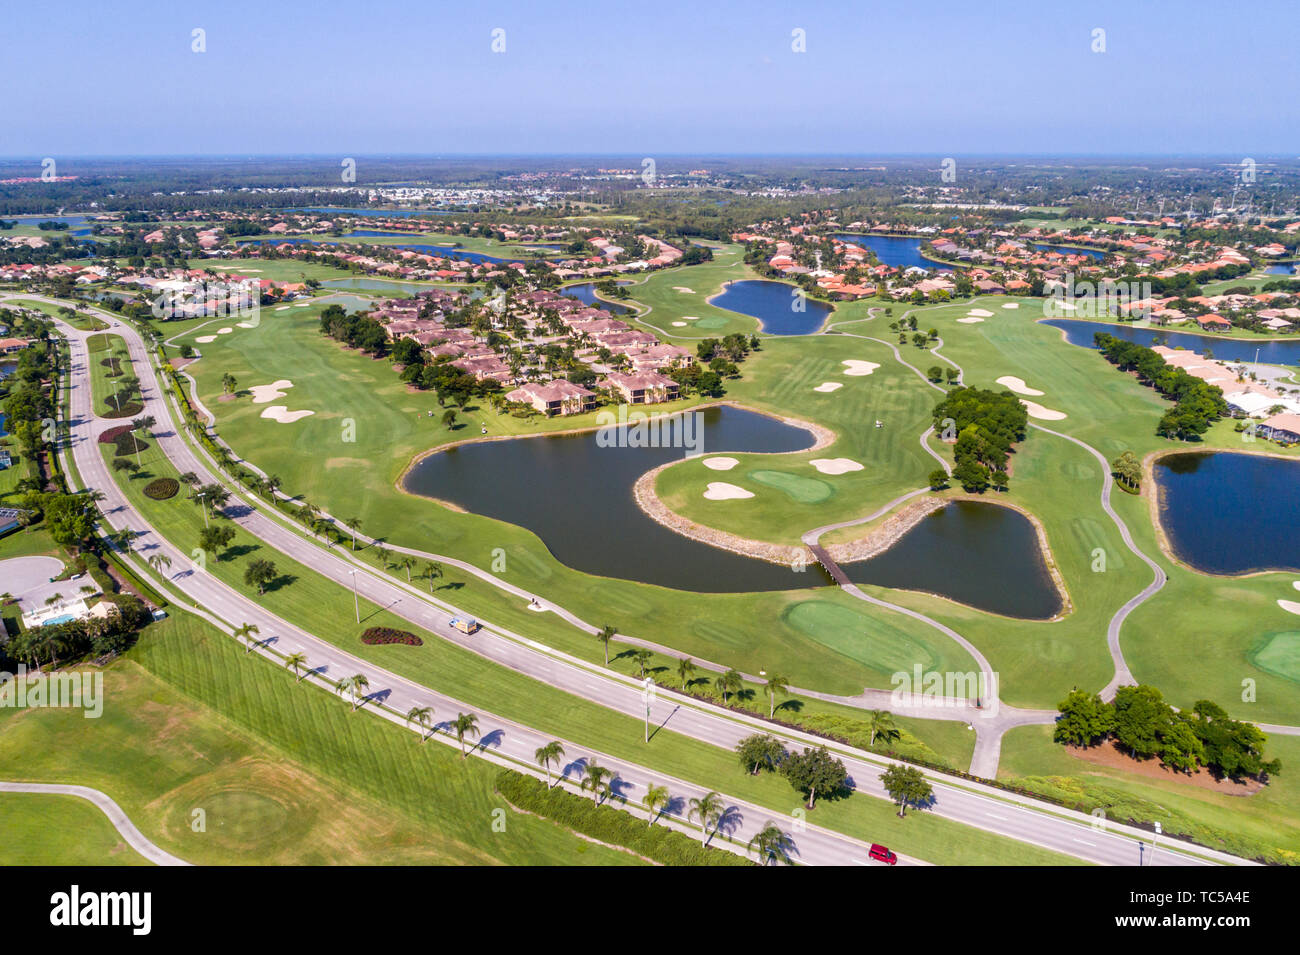 Naples Florida,Lely Resort Boulevard,GreenLinks,Flamingo Island Club golf course,homes,aerial overhead view,FL190514d59 Stock Photo